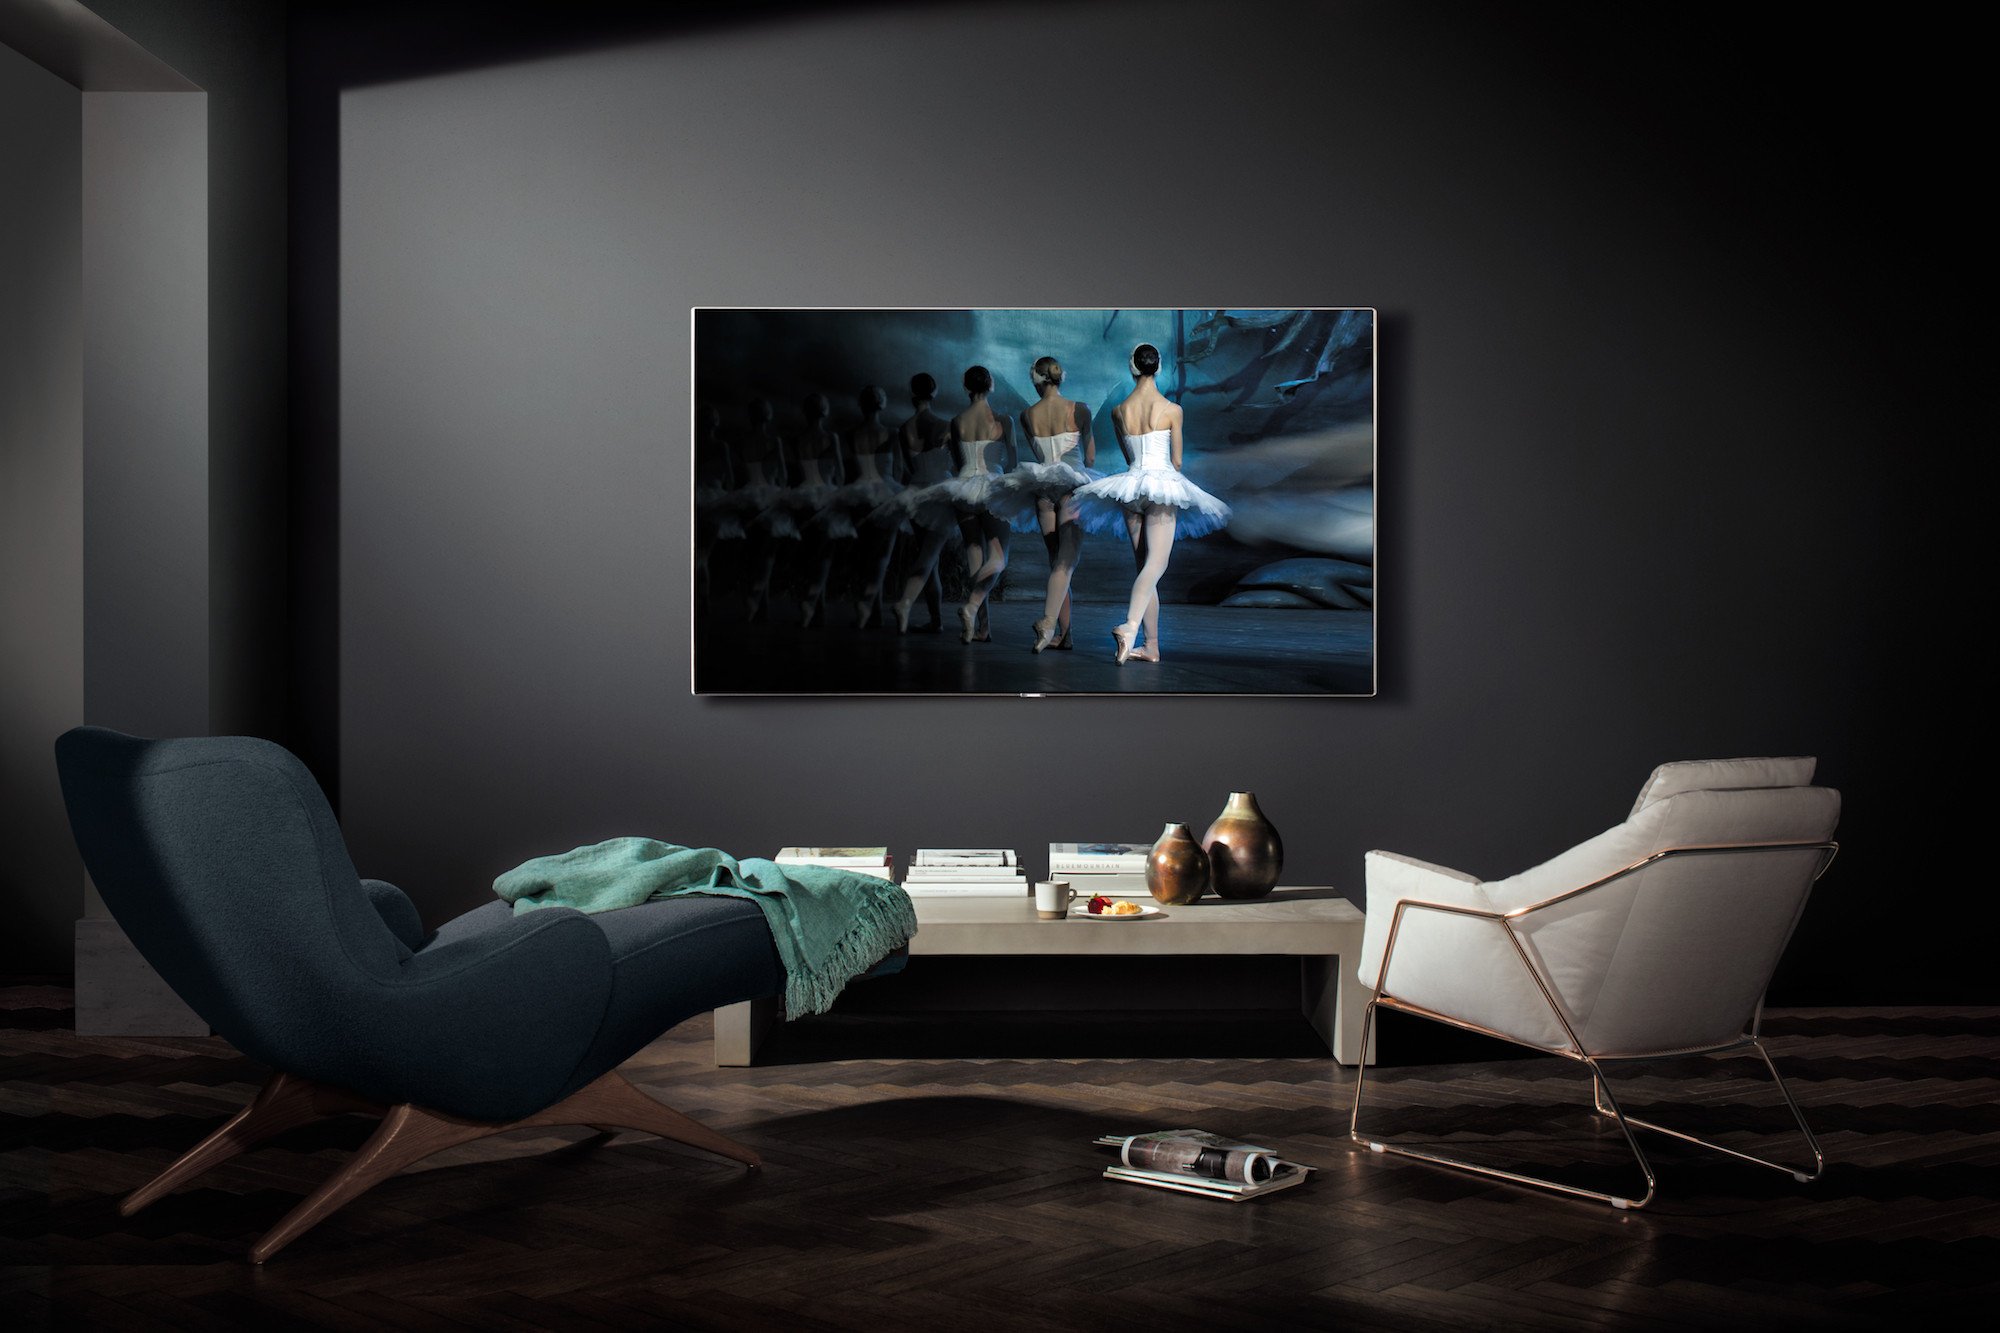 Телевизор hyundai qled. Телевизор QLED Samsung qe65q8cam 65" (2017). Телевизор Samsung QLED на стене. Телевизор самсунг 65 дюймов.